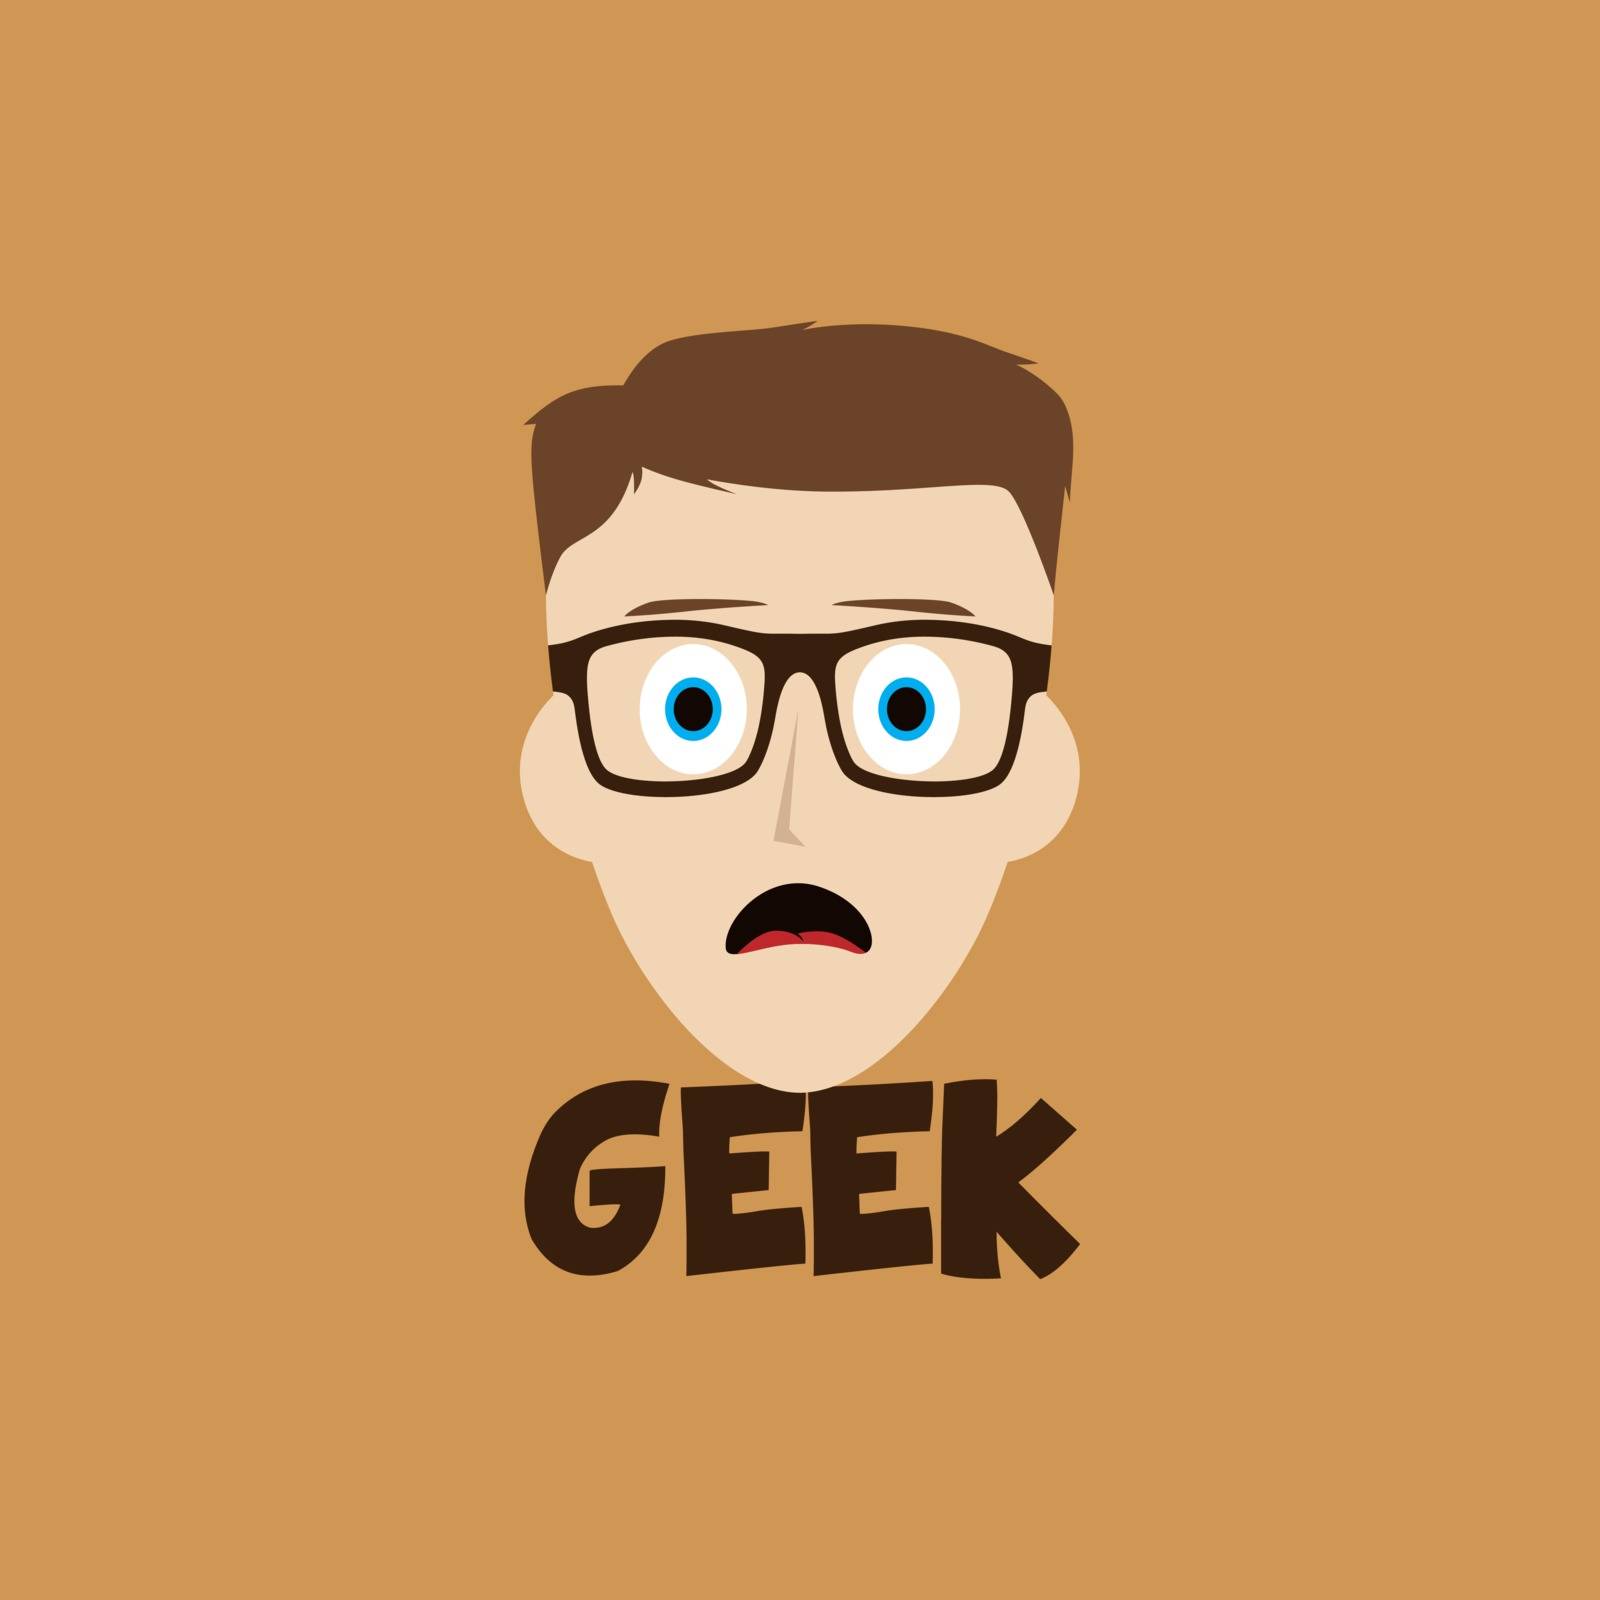 geek guy by vector1st